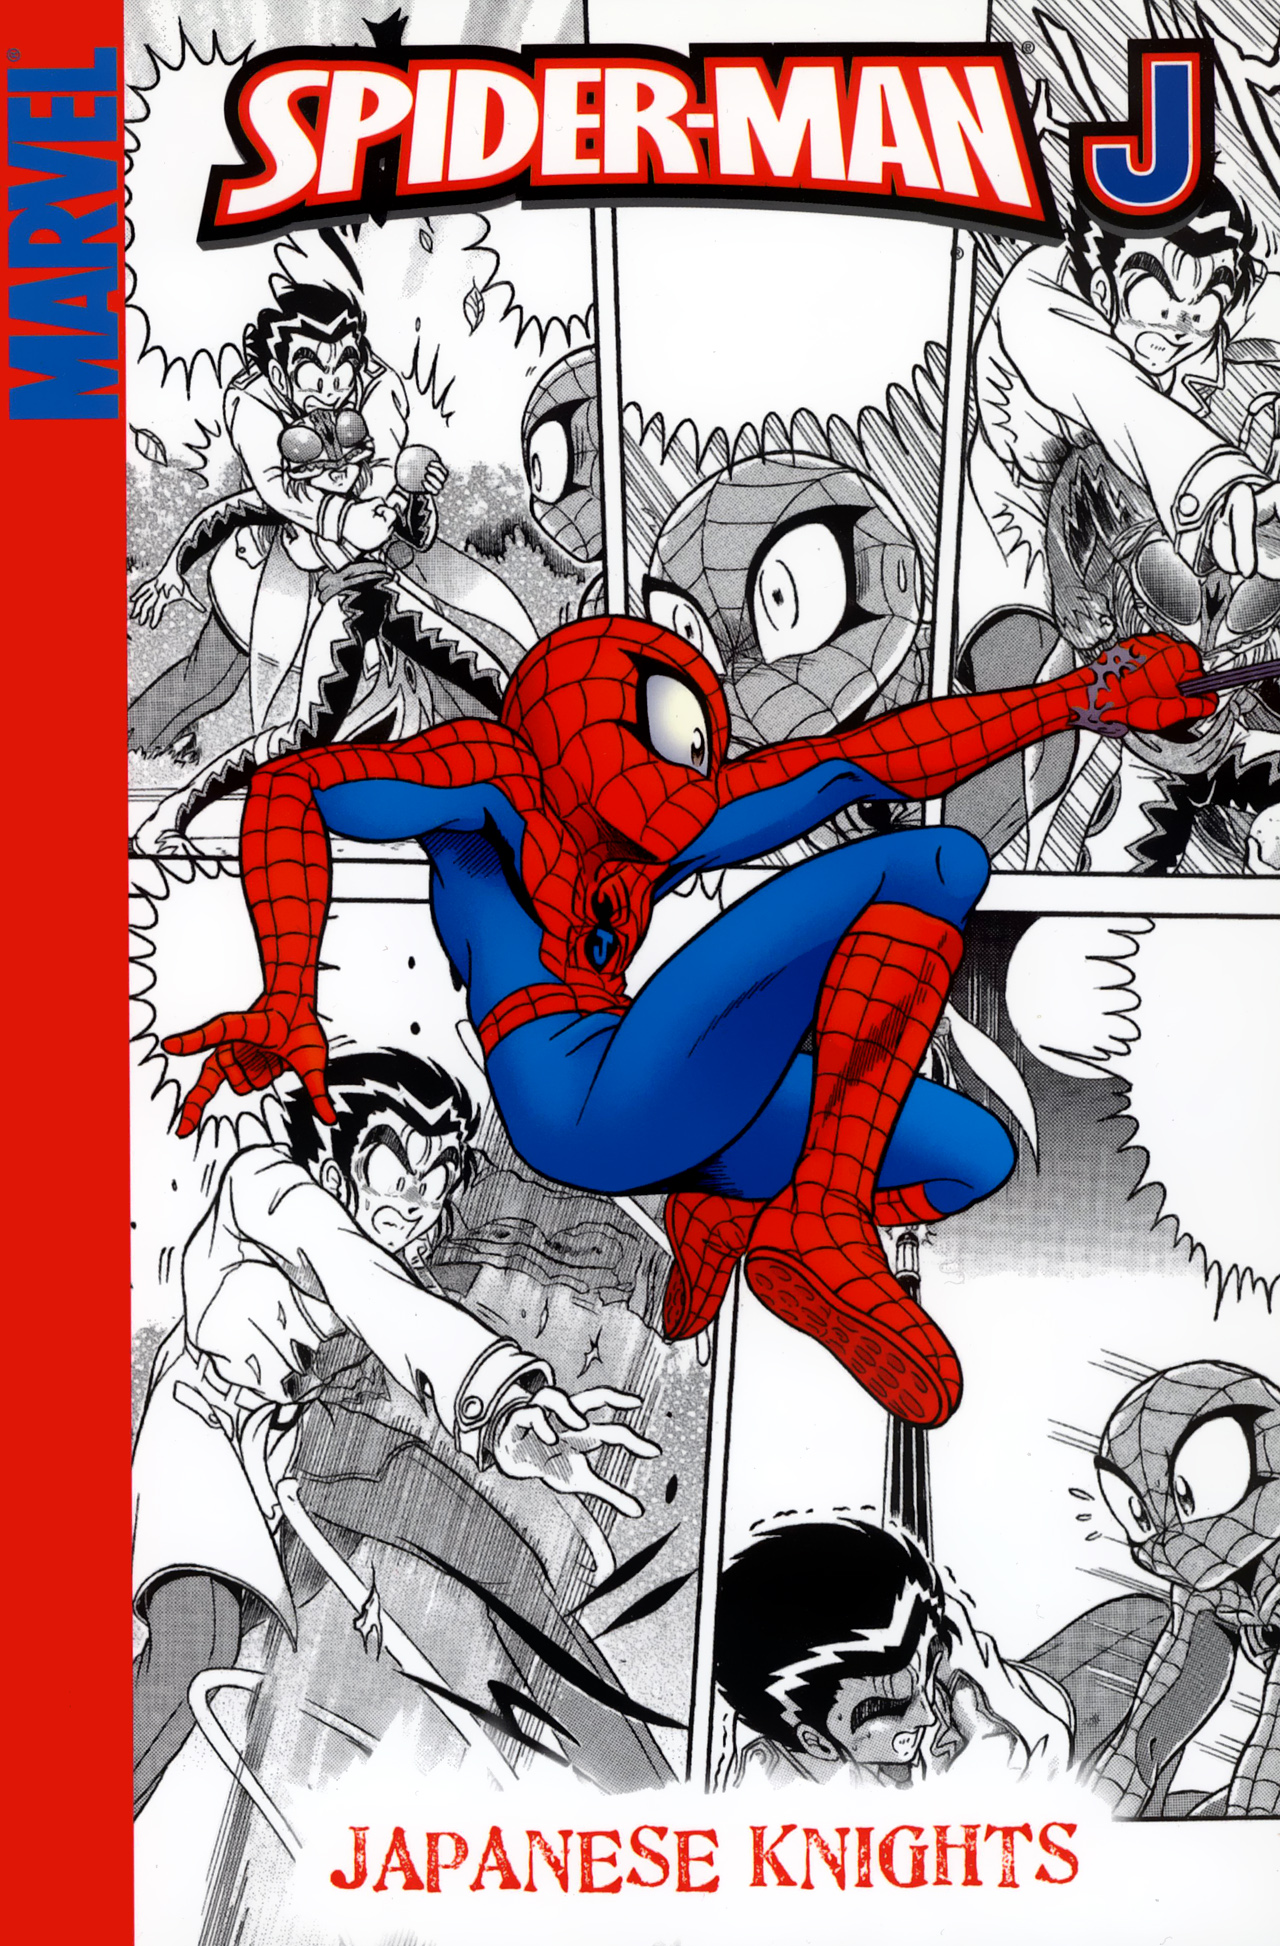 Read online Spider-Man J comic -  Issue # TPB 1 - 1